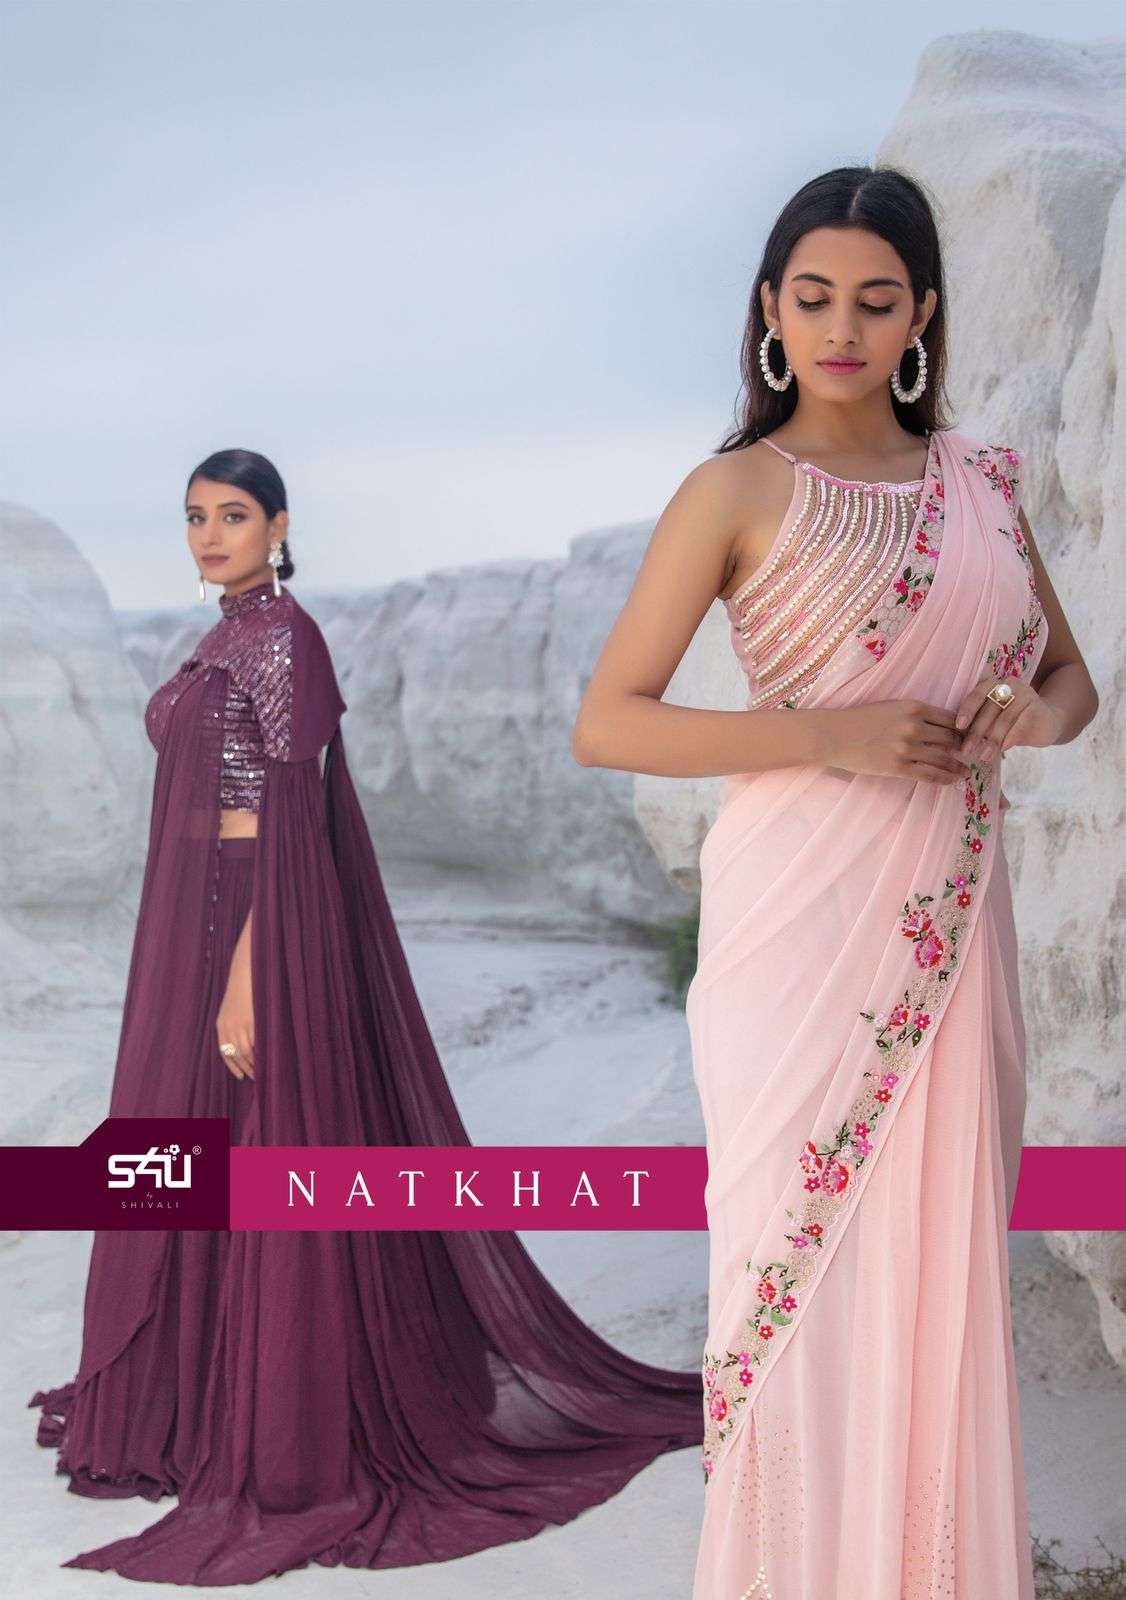 s4u natkhat 101-105 series party wear designer saree catalogue wholesale price surat